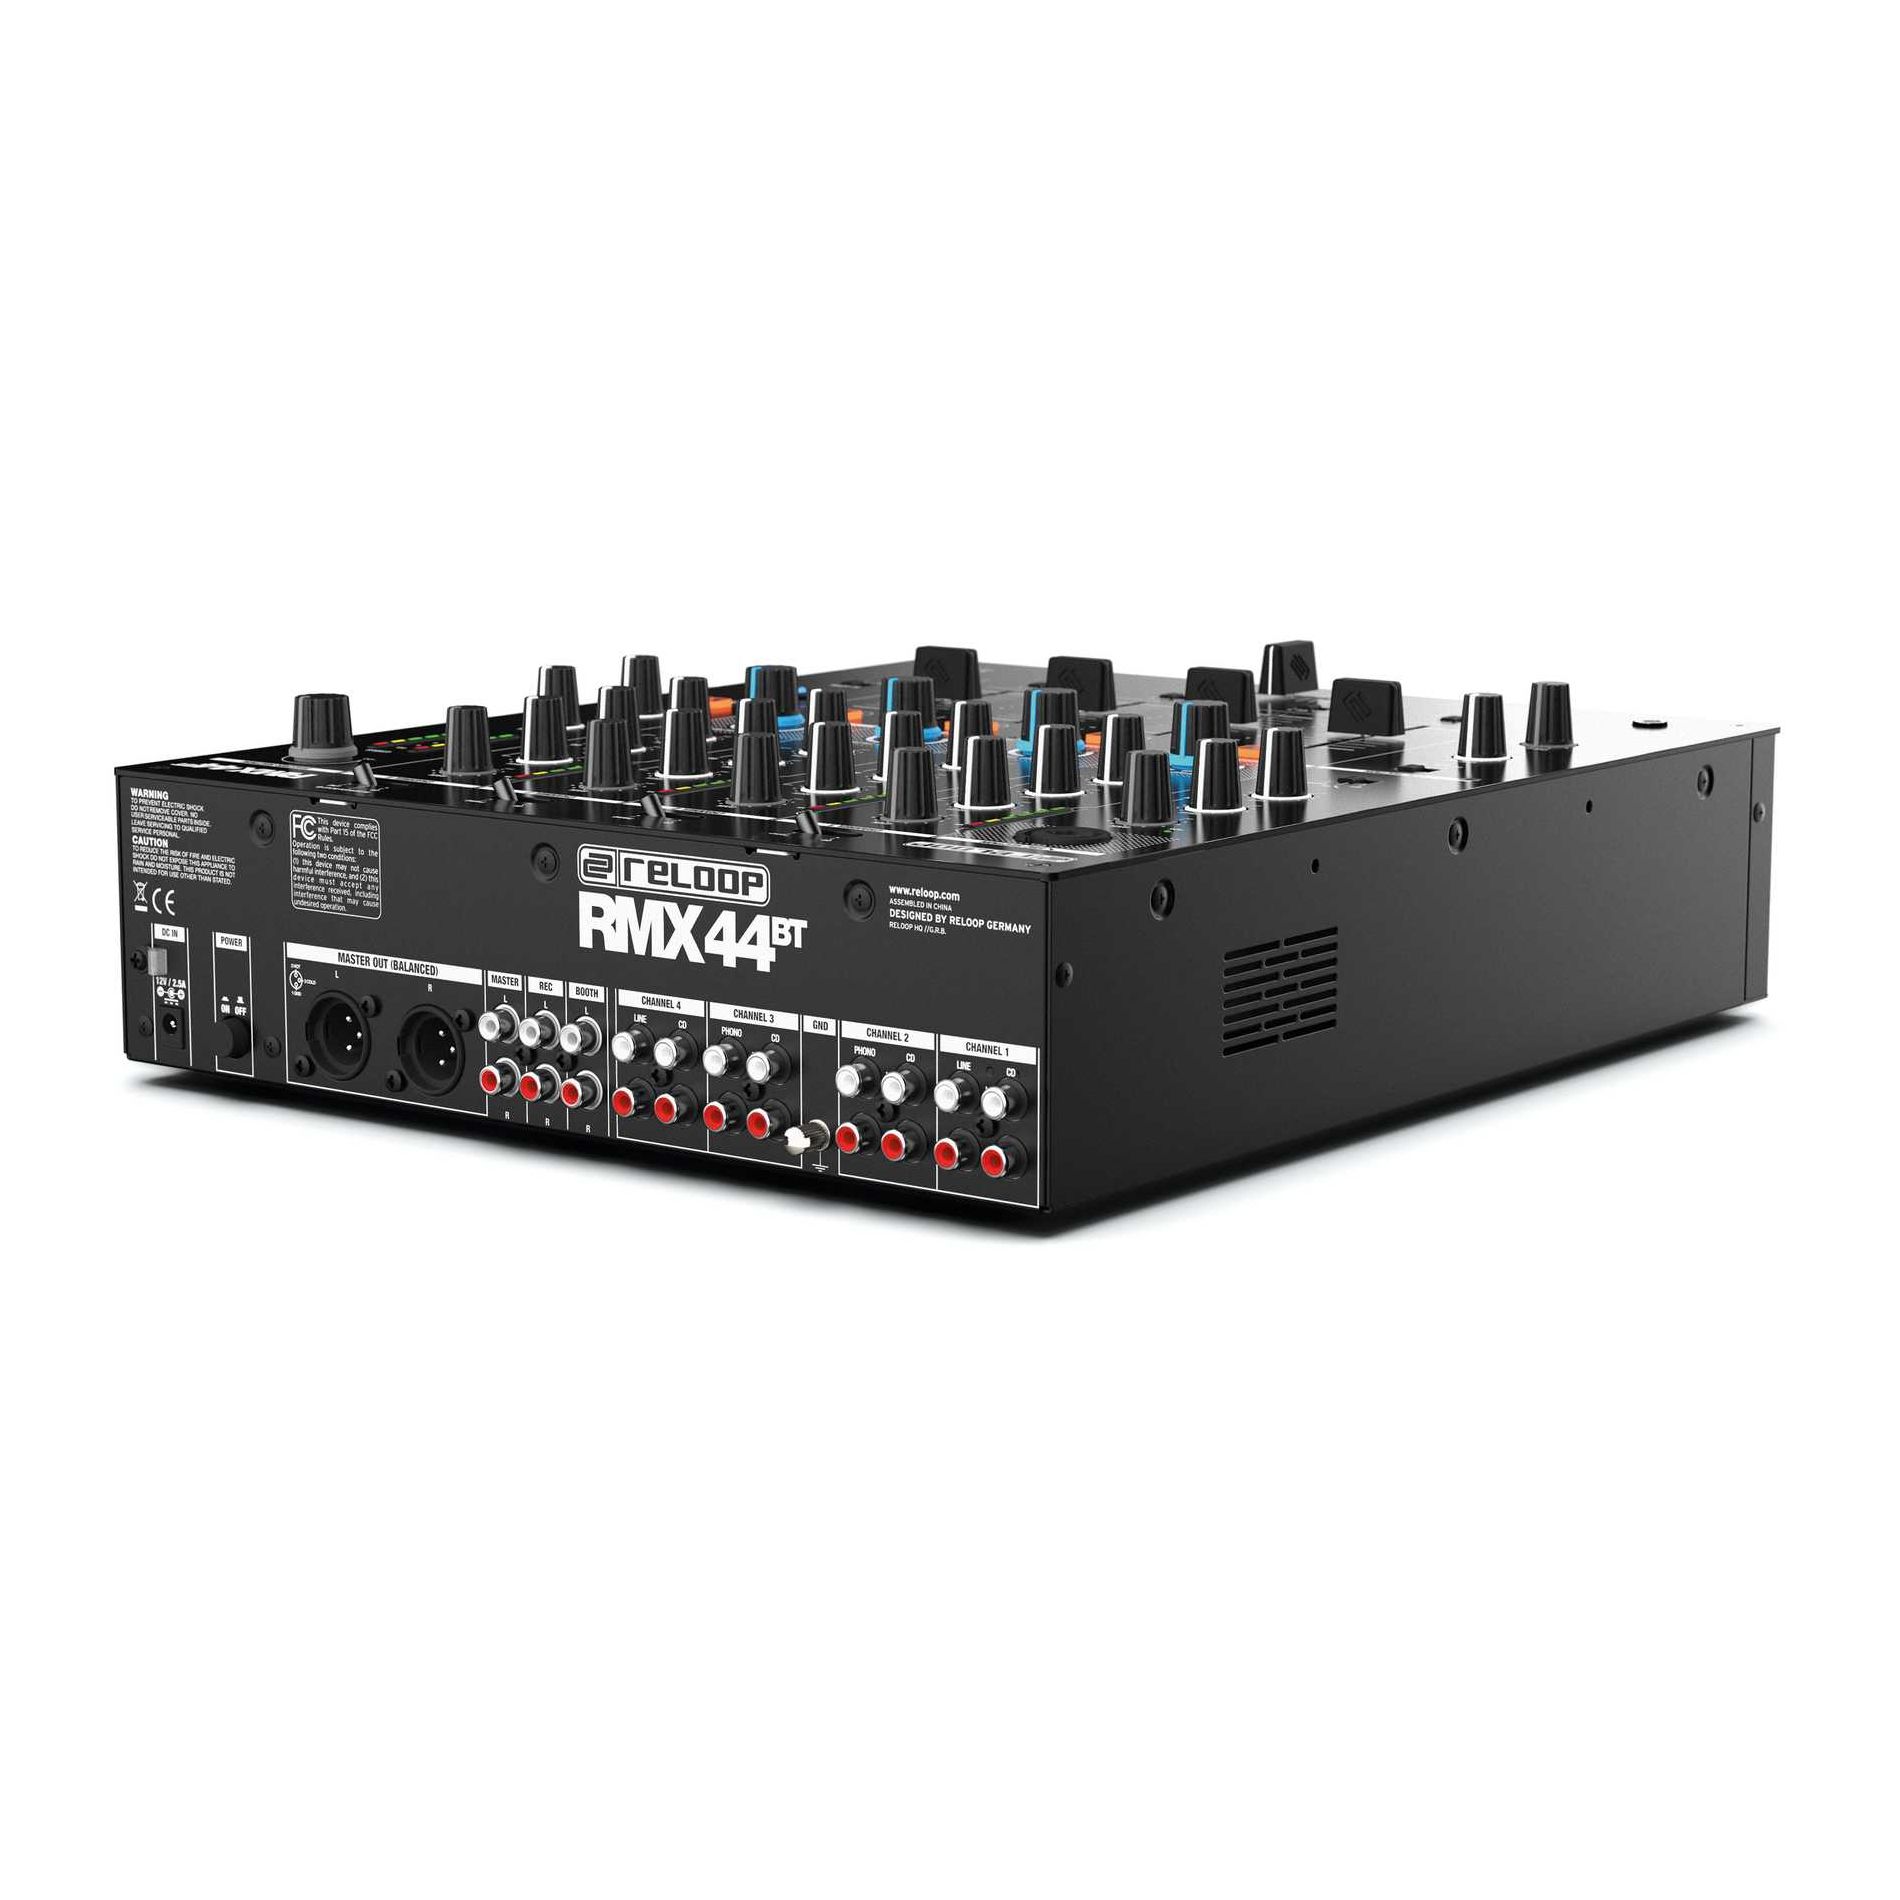 Reloop Rmx-44 Bt - Mixer DJ - Variation 2